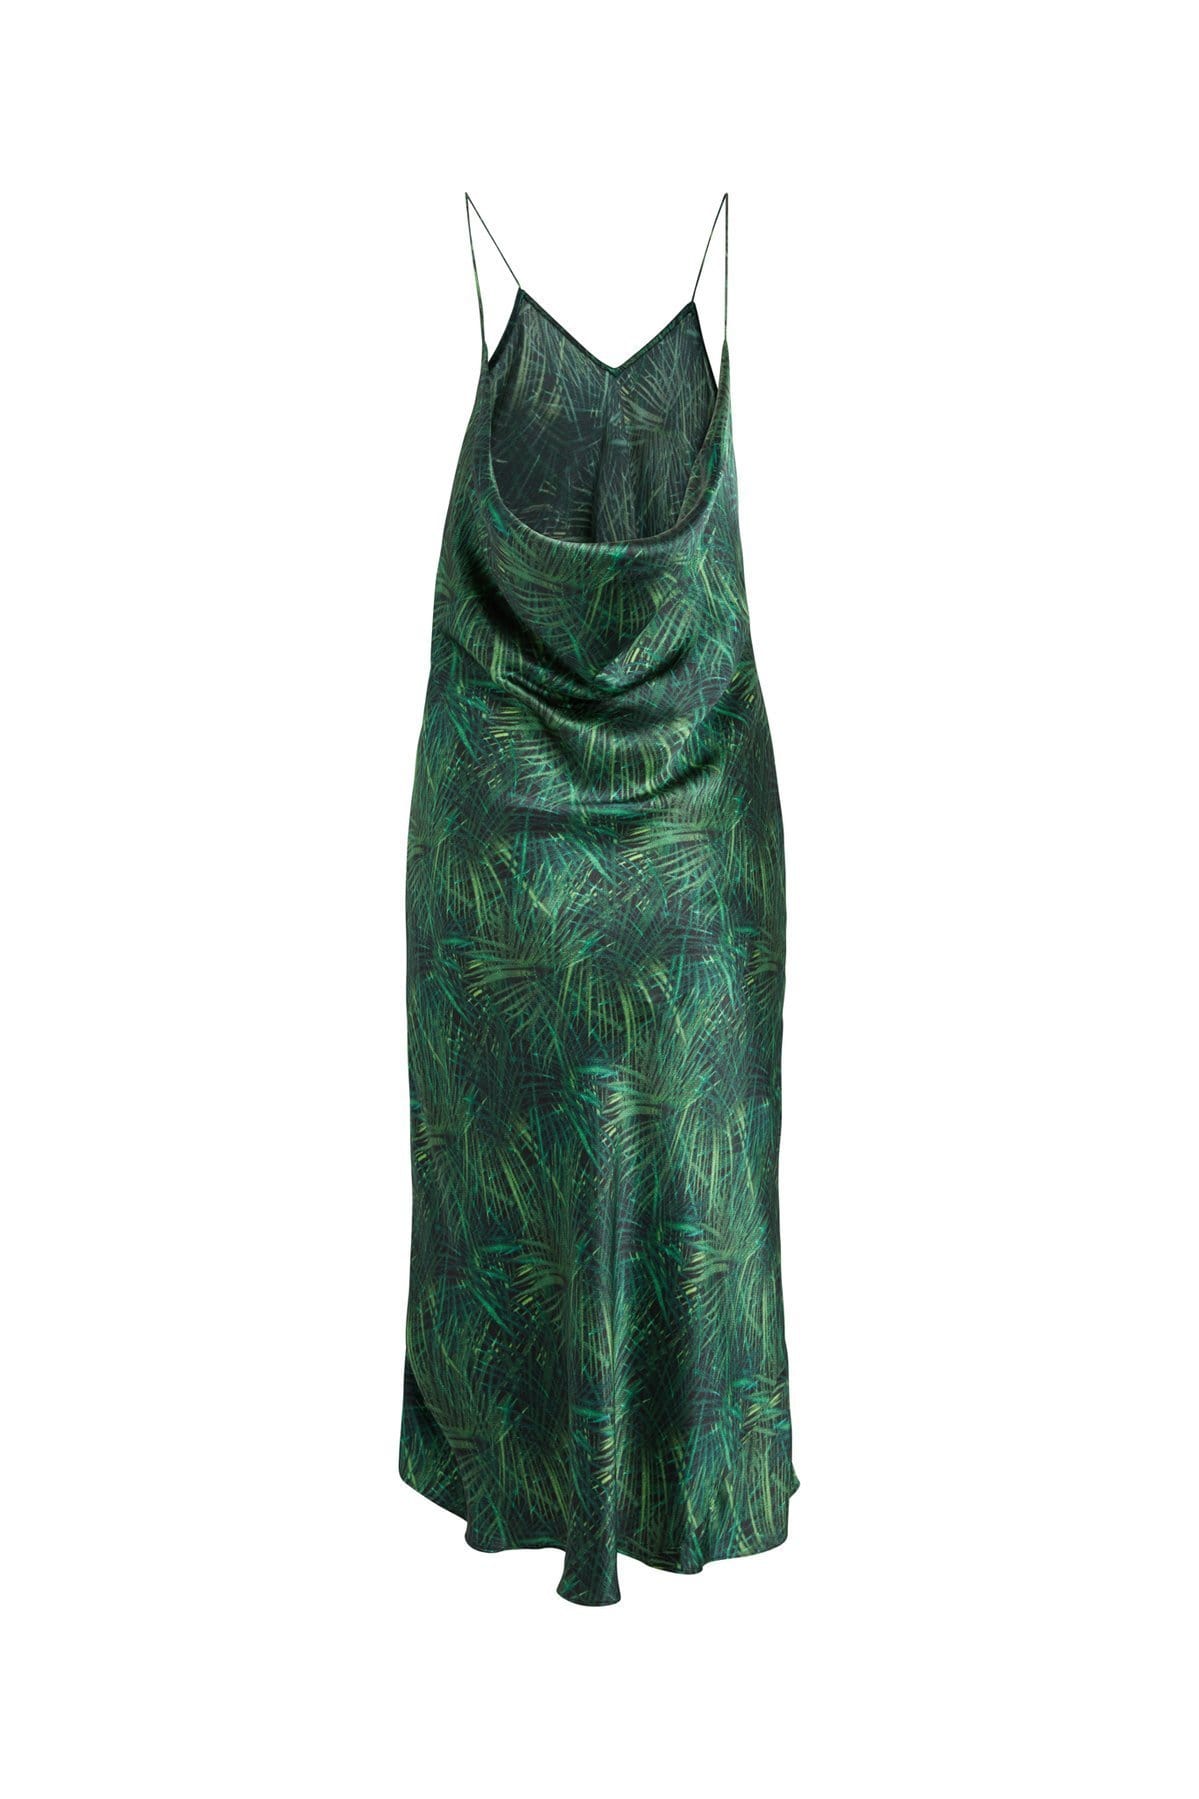 Catherine Gee Celeste dress in Palm Print | Basicality